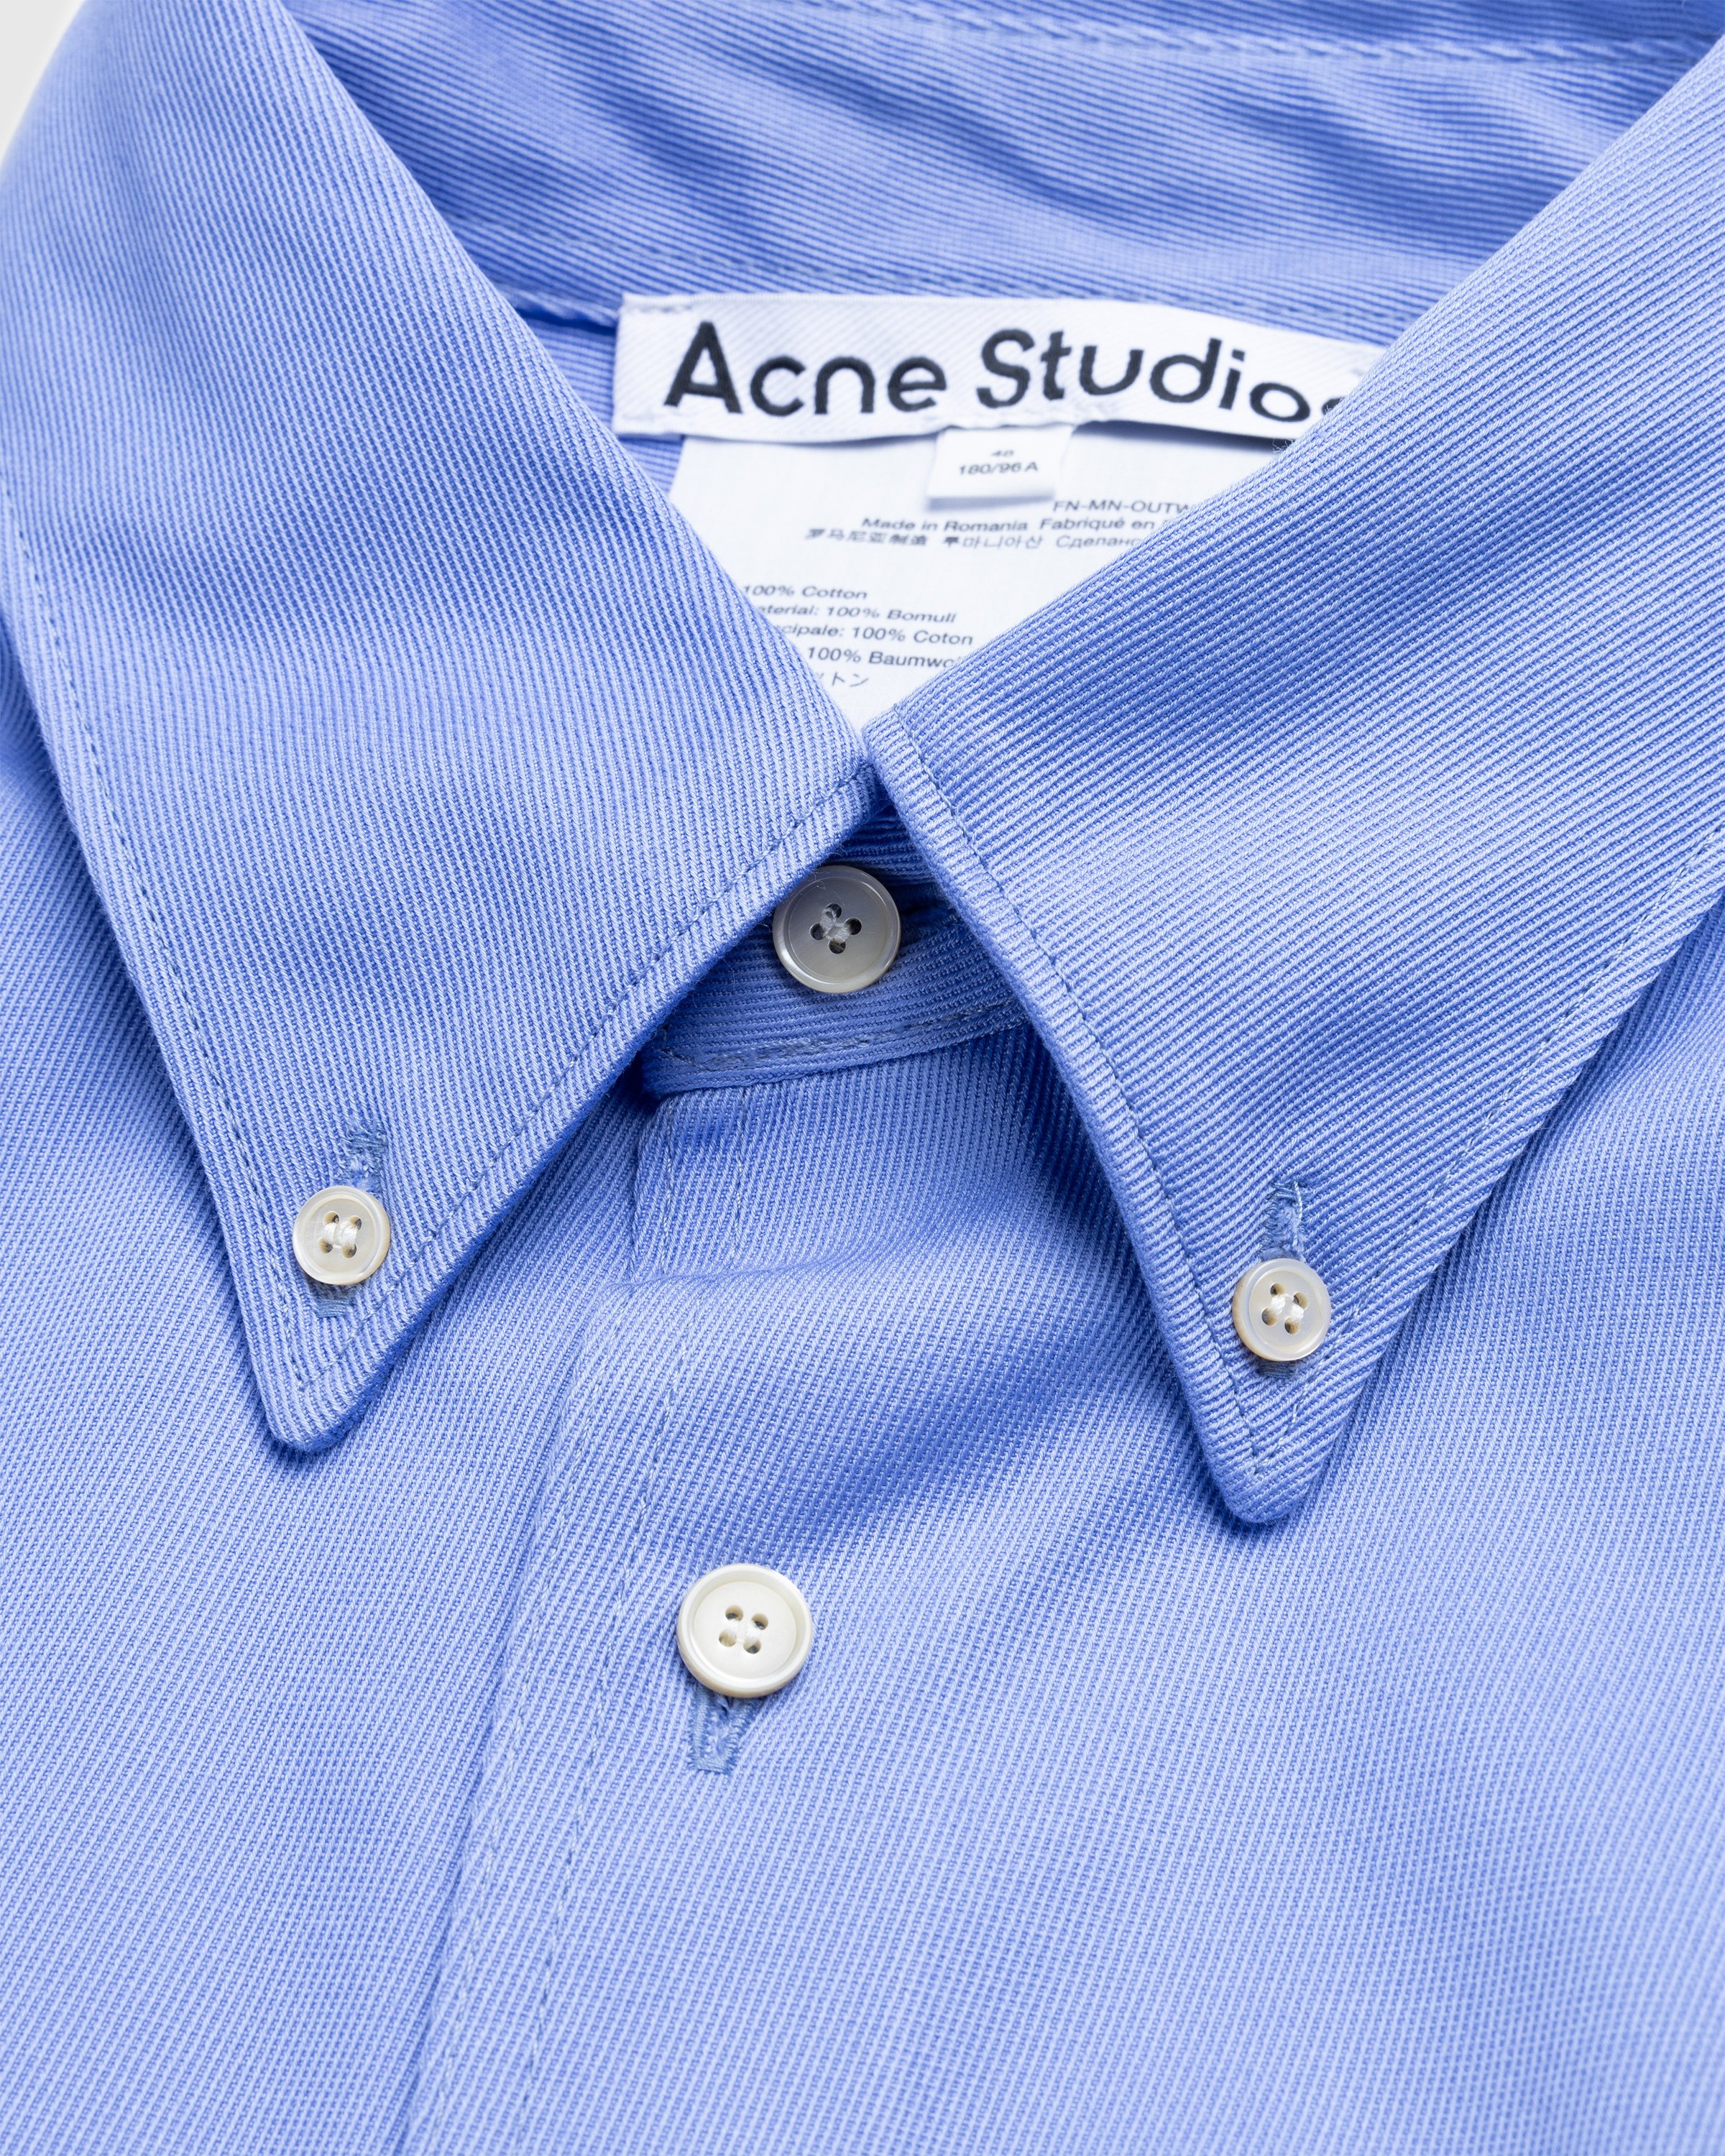 Acne Studios - Button-Up Overshirt Cornflower Blue - Clothing - Blue - Image 5